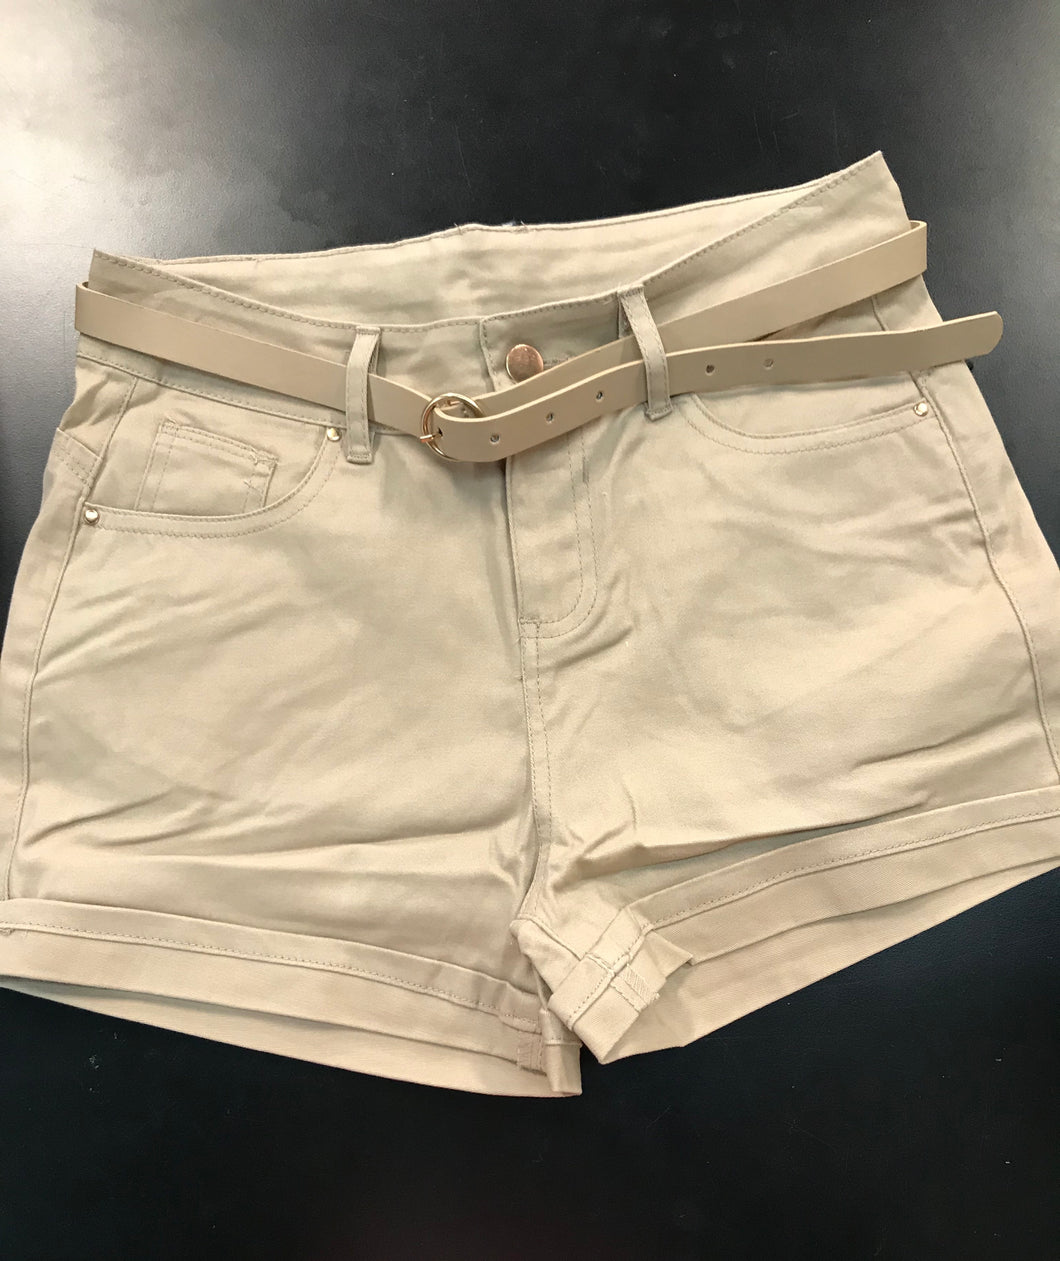 Cuff Pocket Shorts with Belt